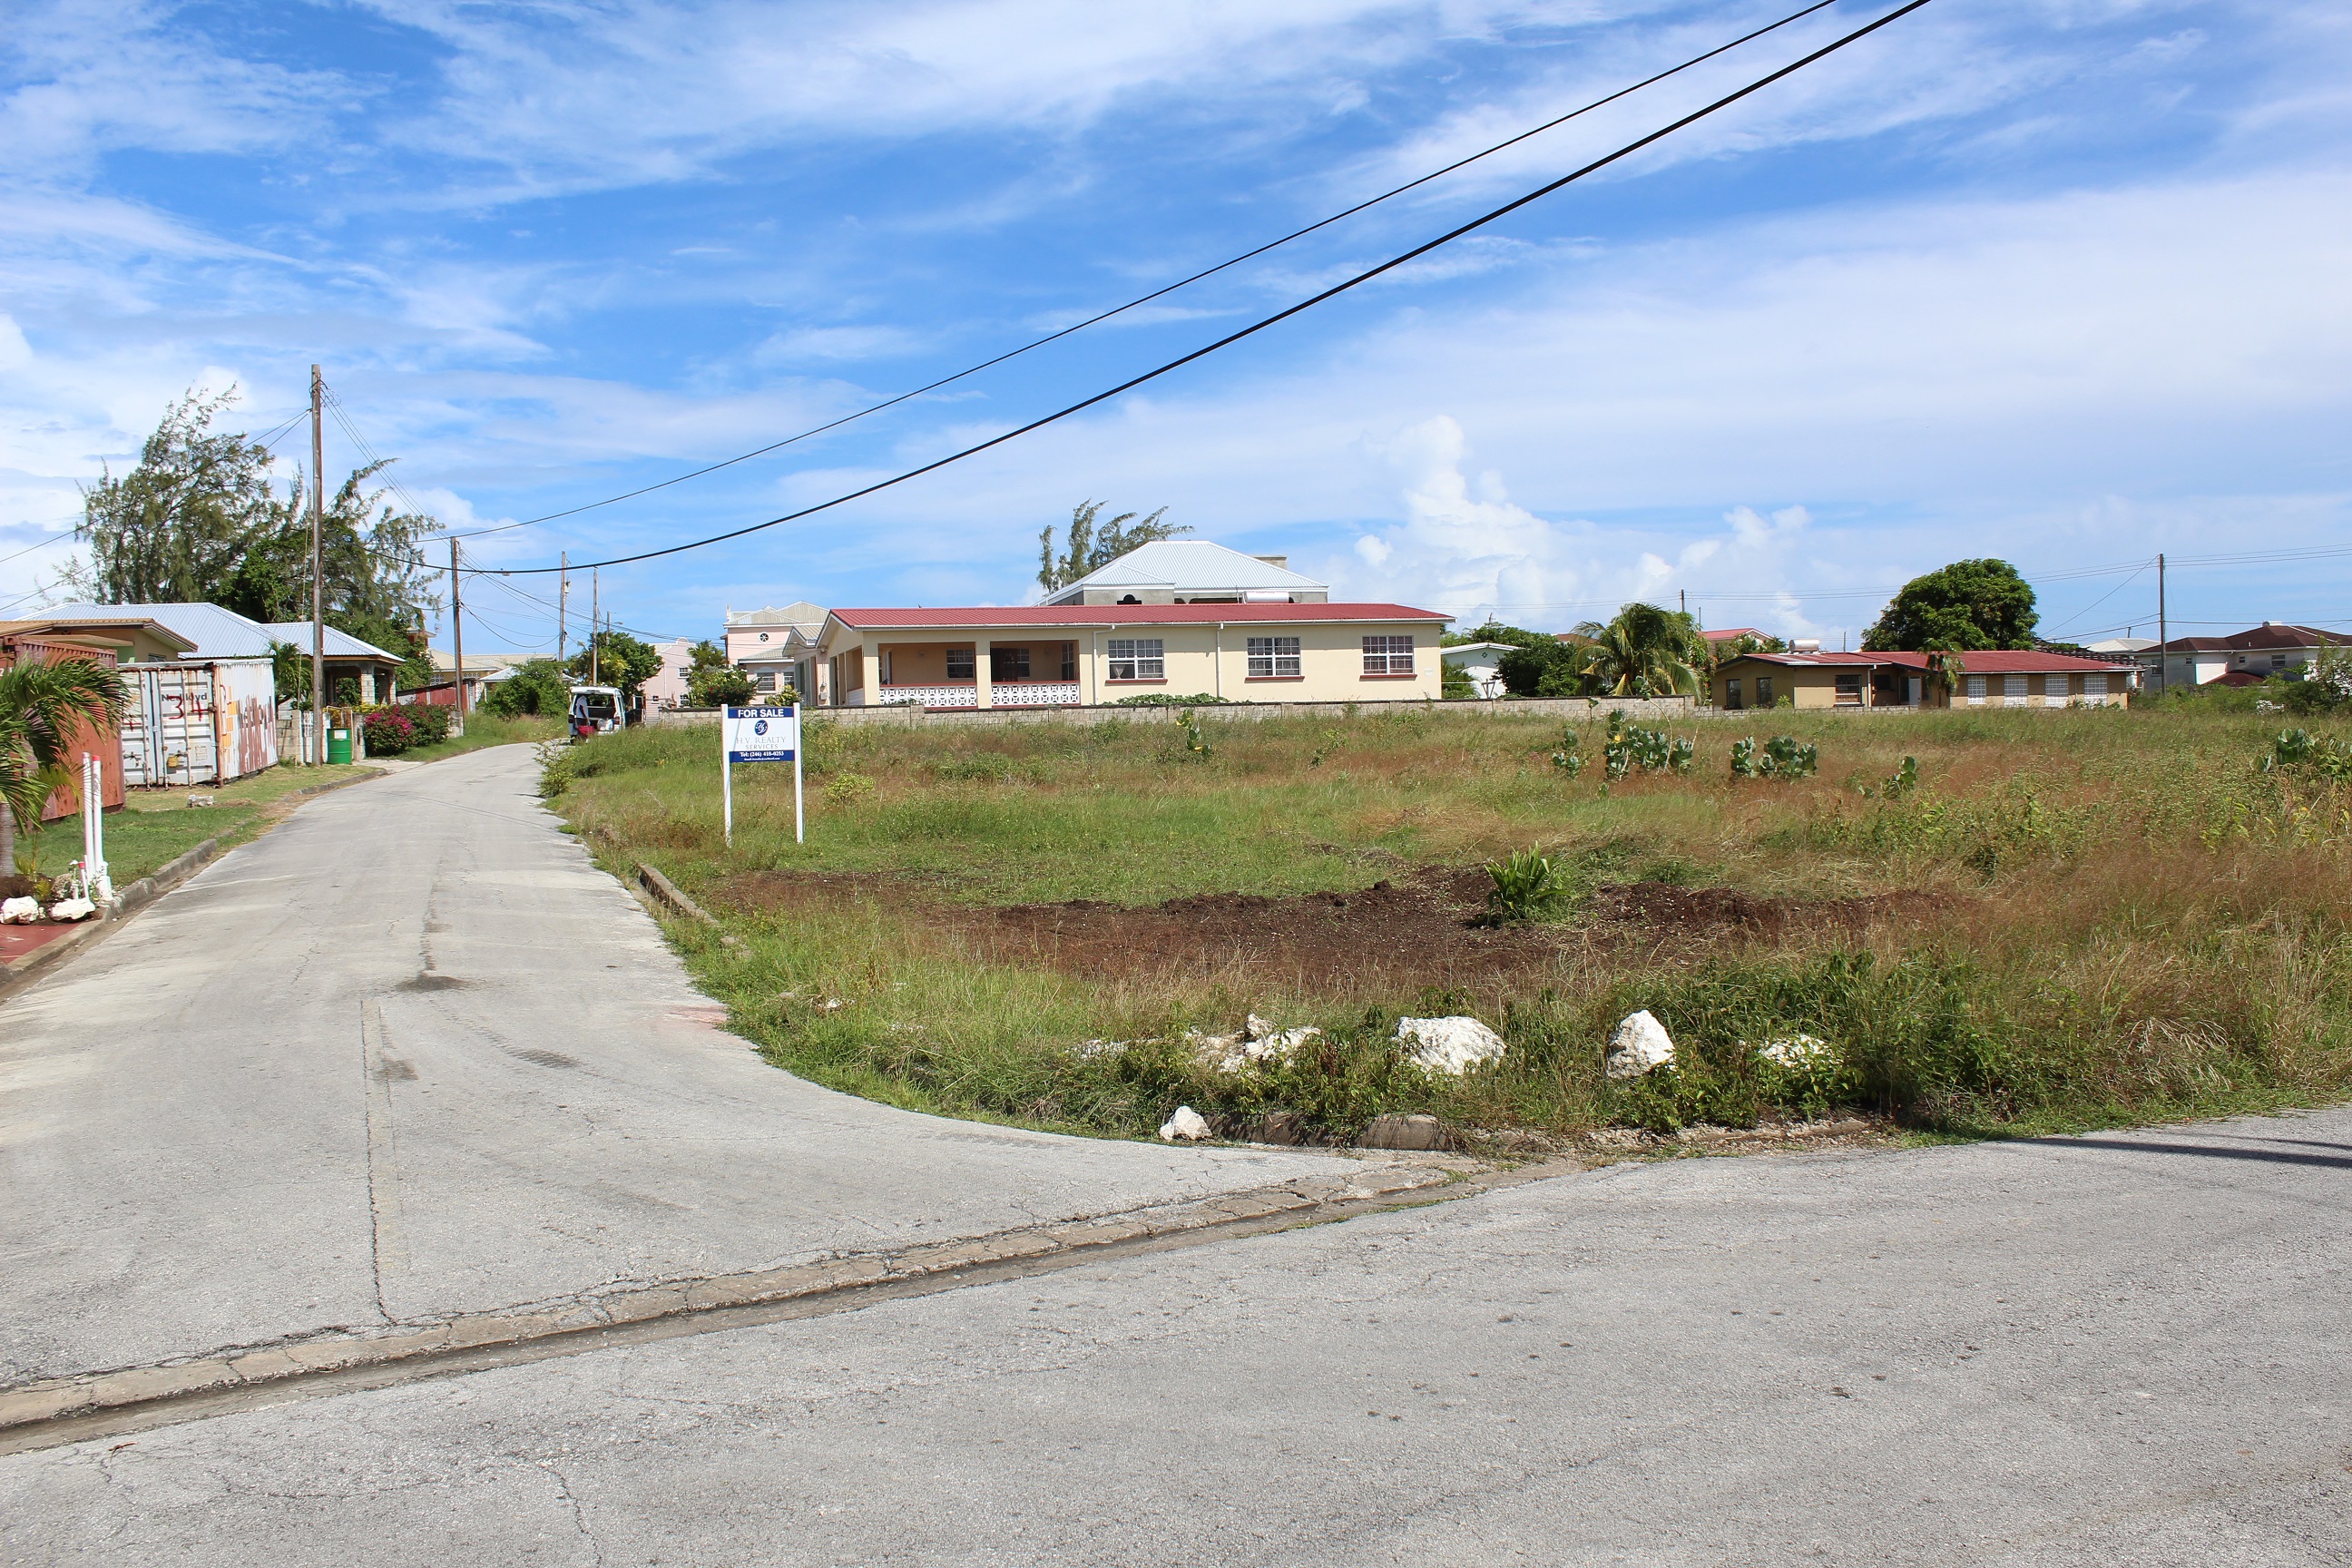 Harmony Hall Development, Lot 58, St. Philip, Barbados